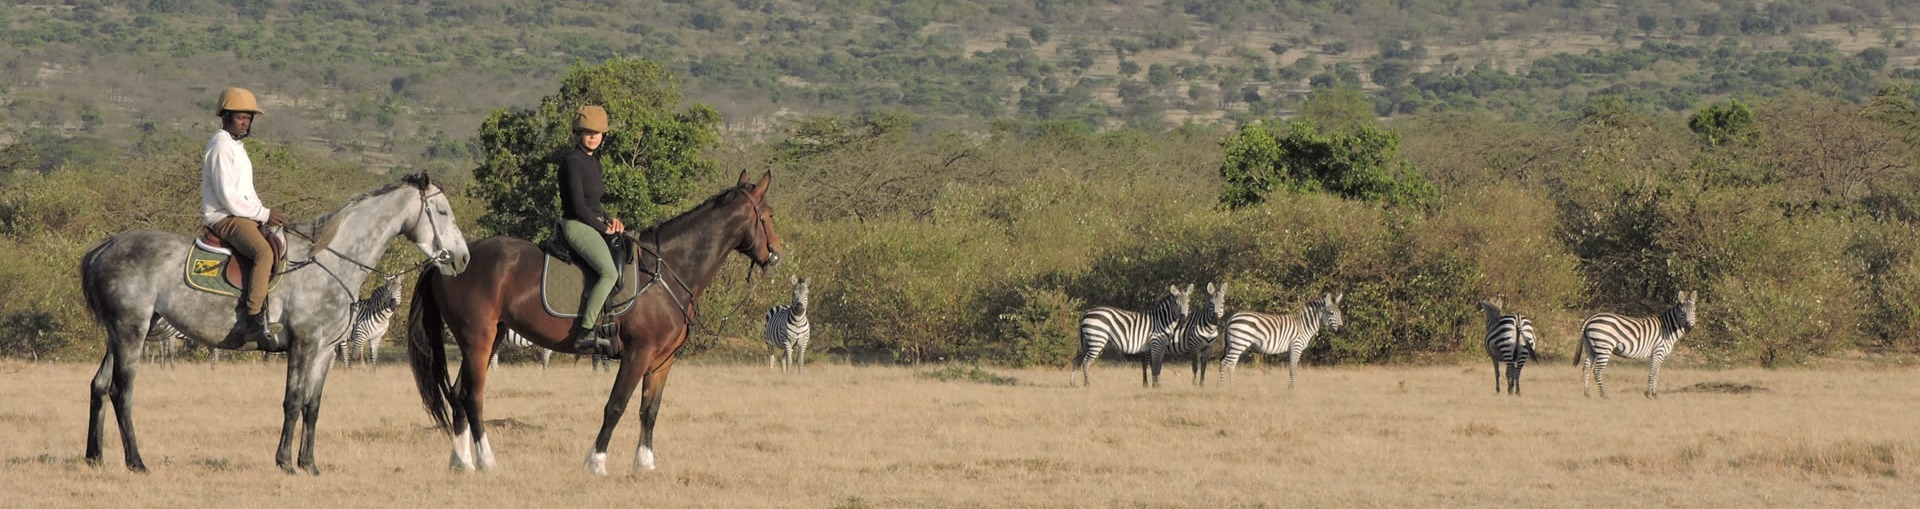 Safari in Kenia / Masai Mara 1384